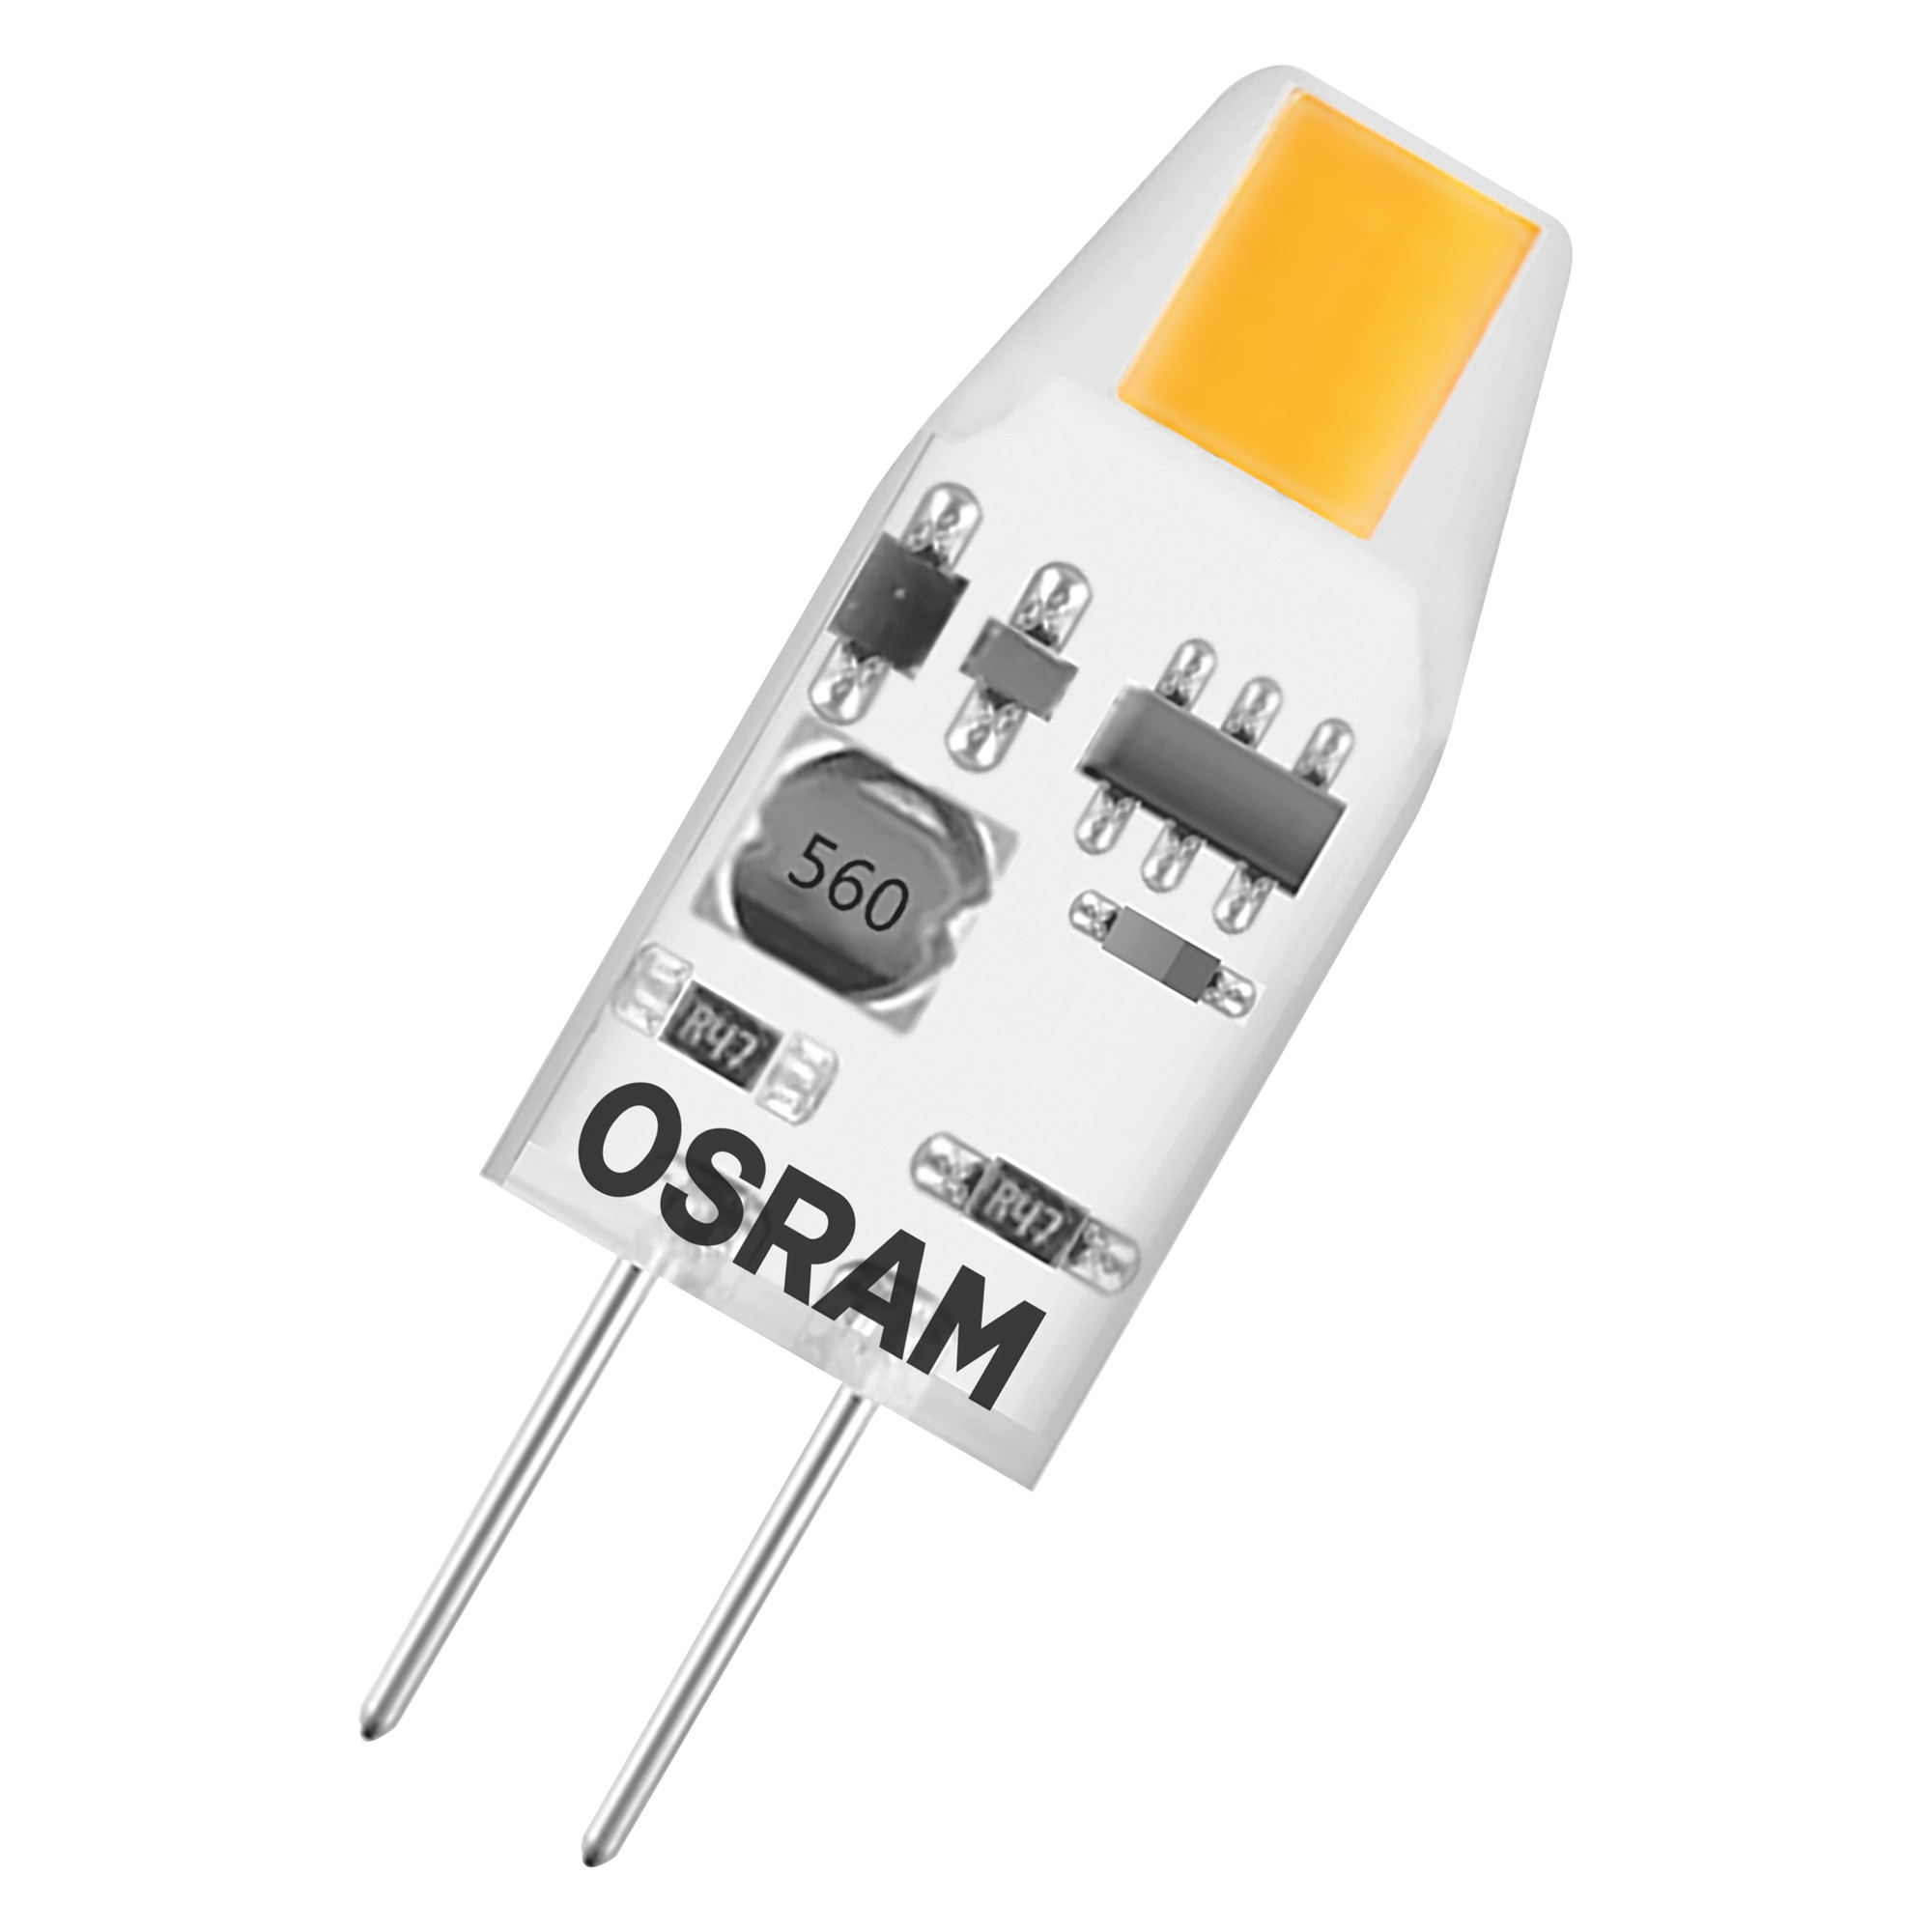 Osram LED Stiftsockellampe Filament Pin 1 Watt 827 2700 Kelvin warmweiss extra G4 klar